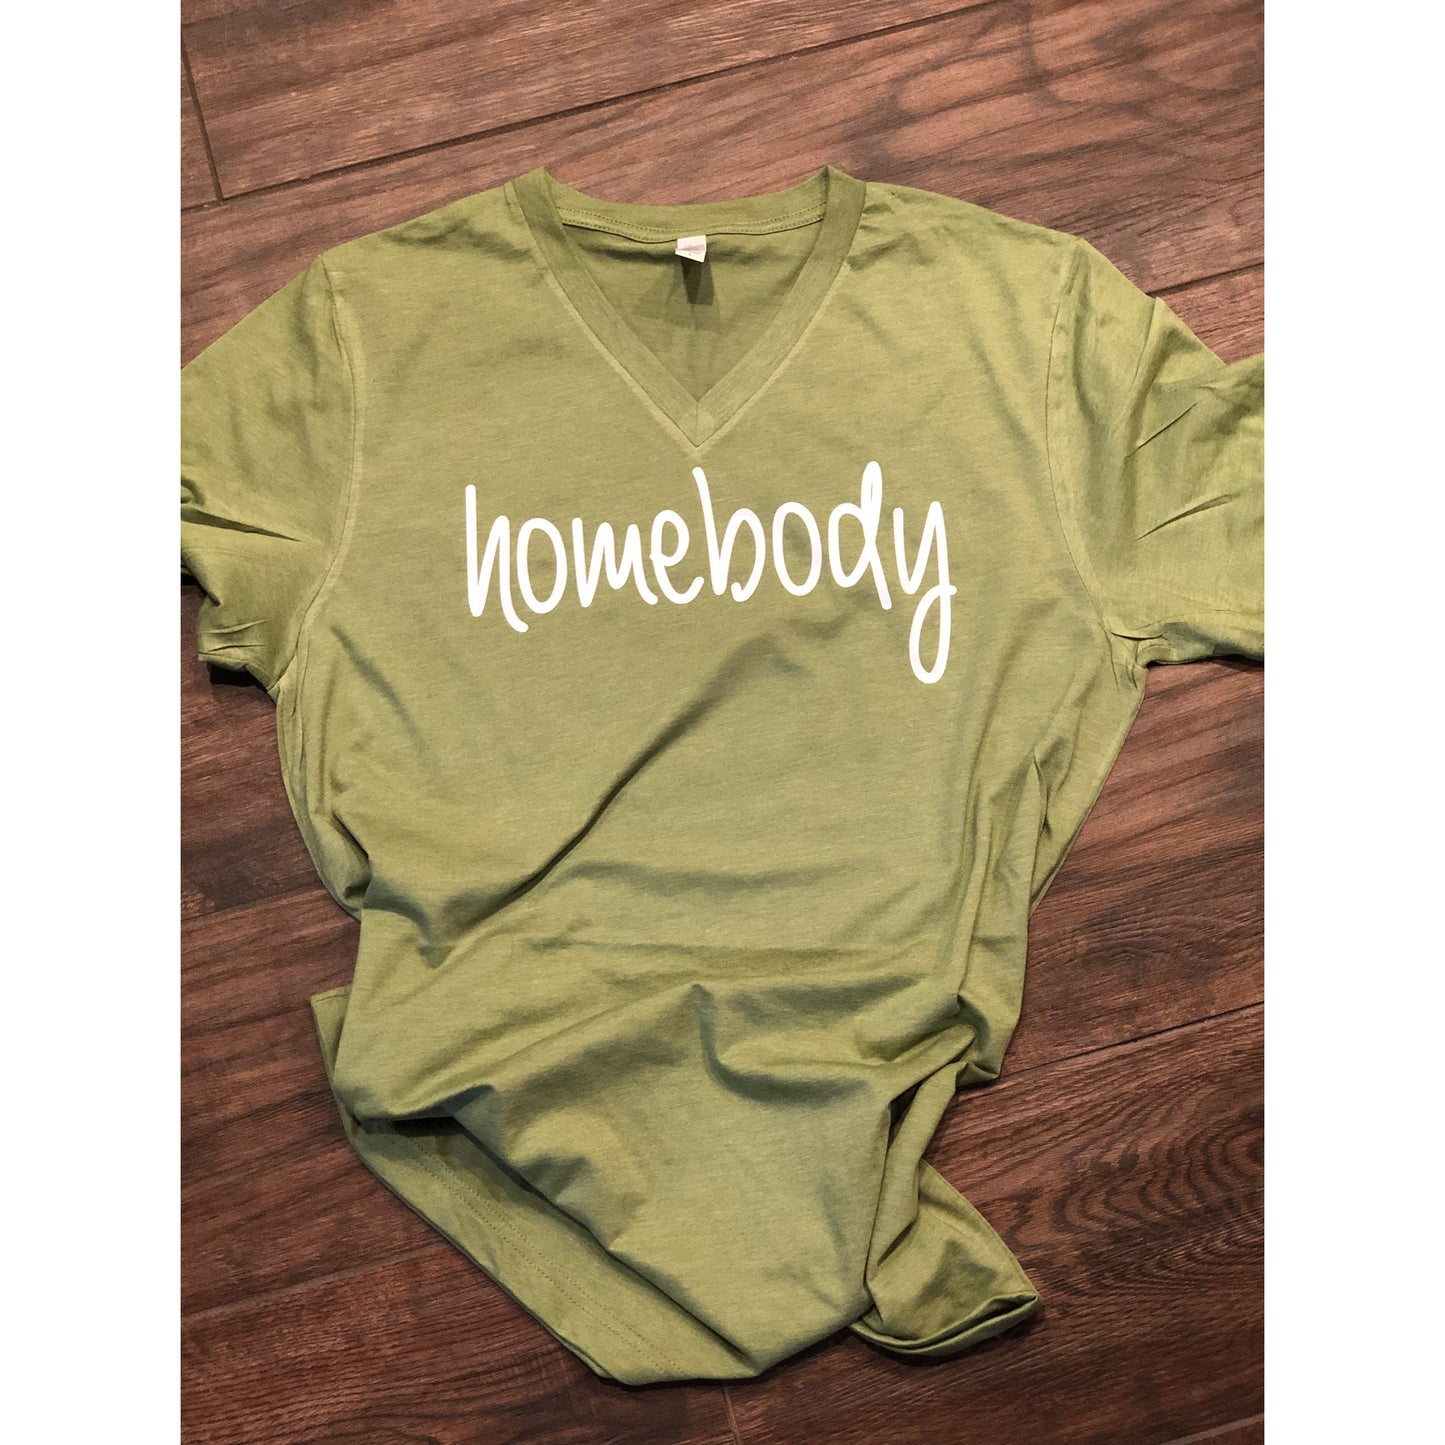 Homebody T-Shirt Tuesday